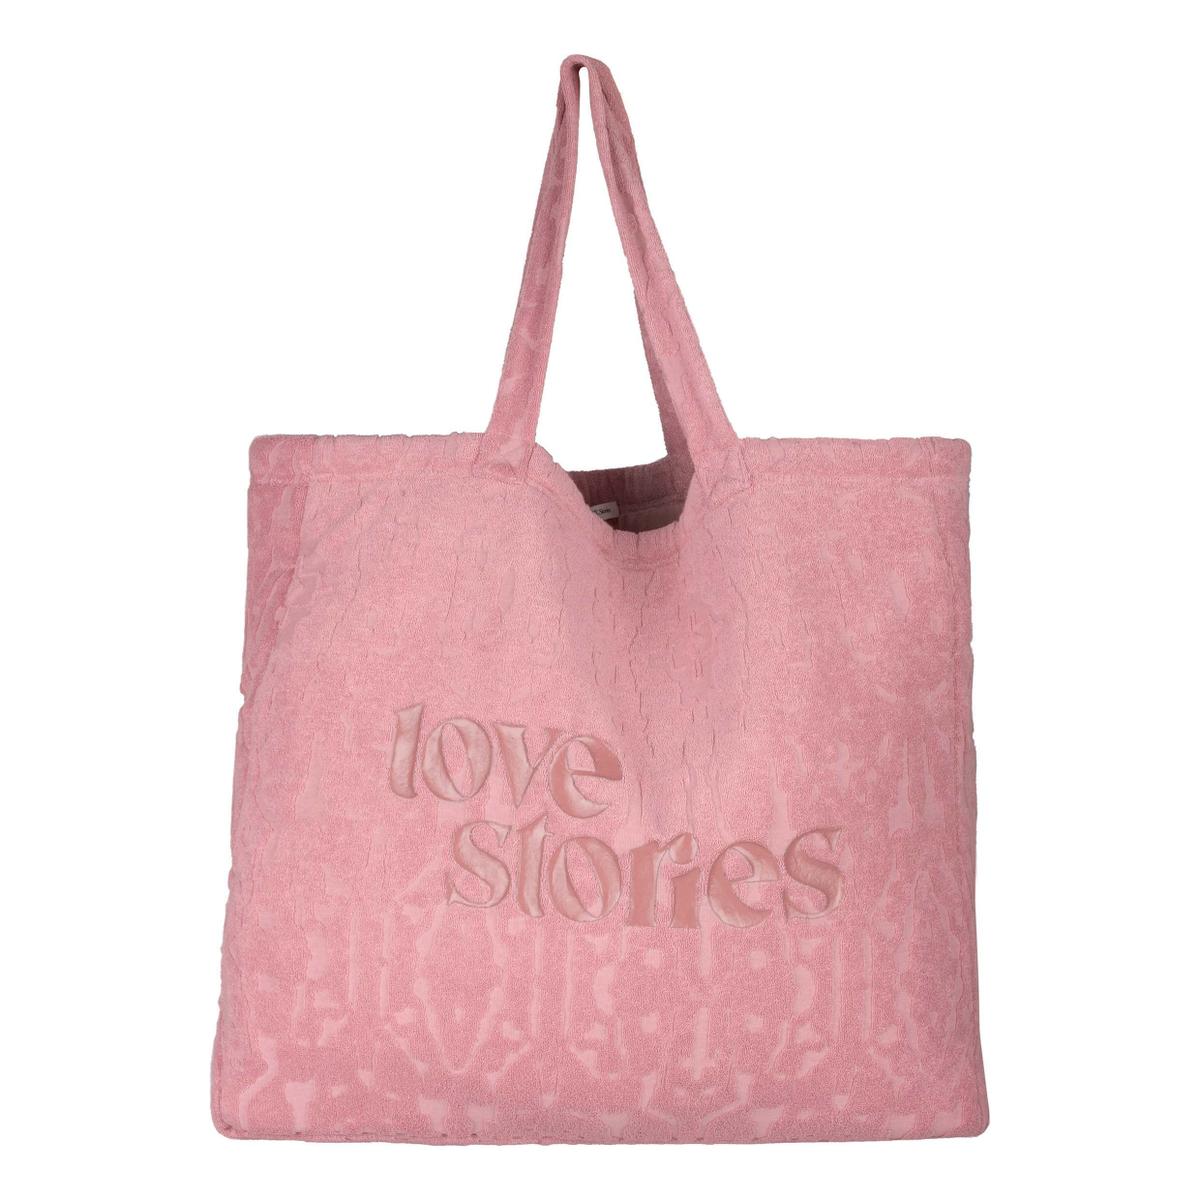 Love stories Tote Bag